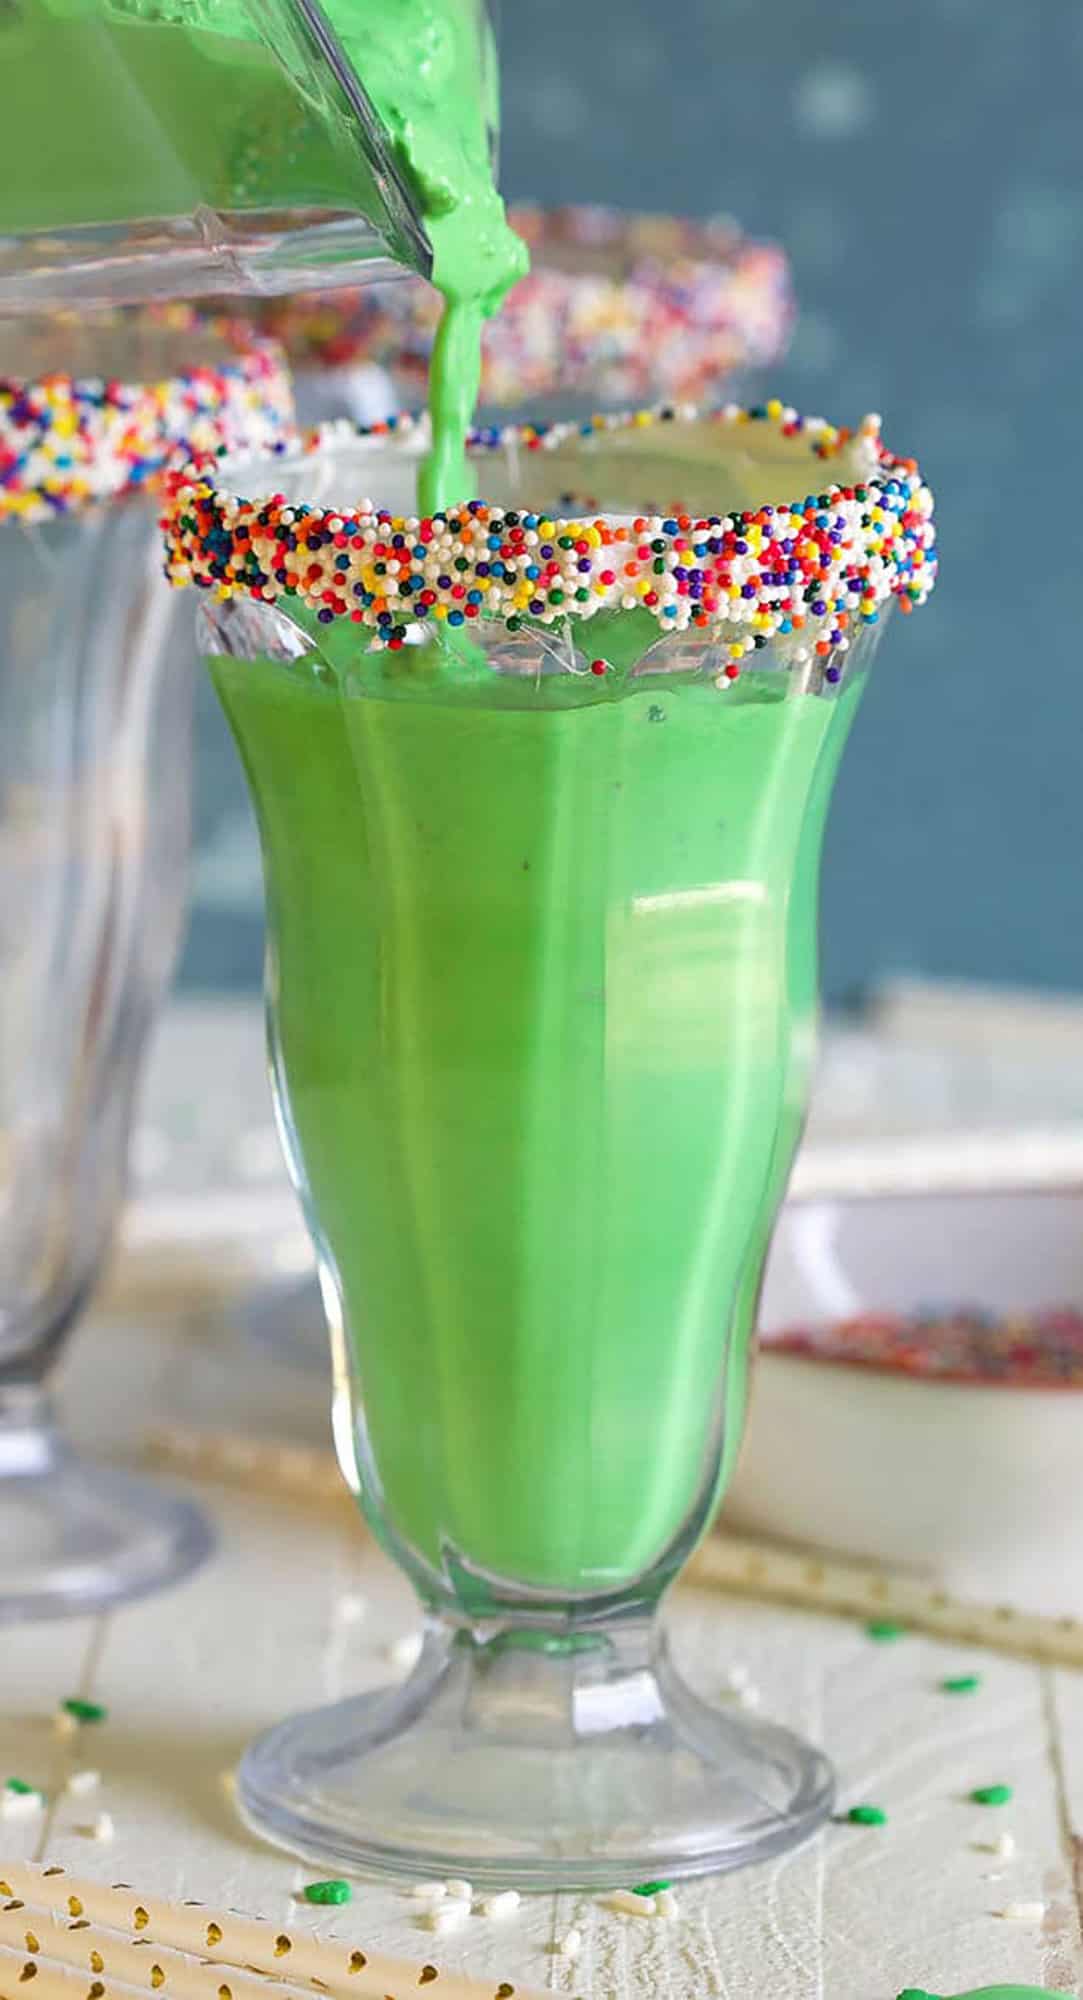 Shamrock shake being poured into a milkshake glass